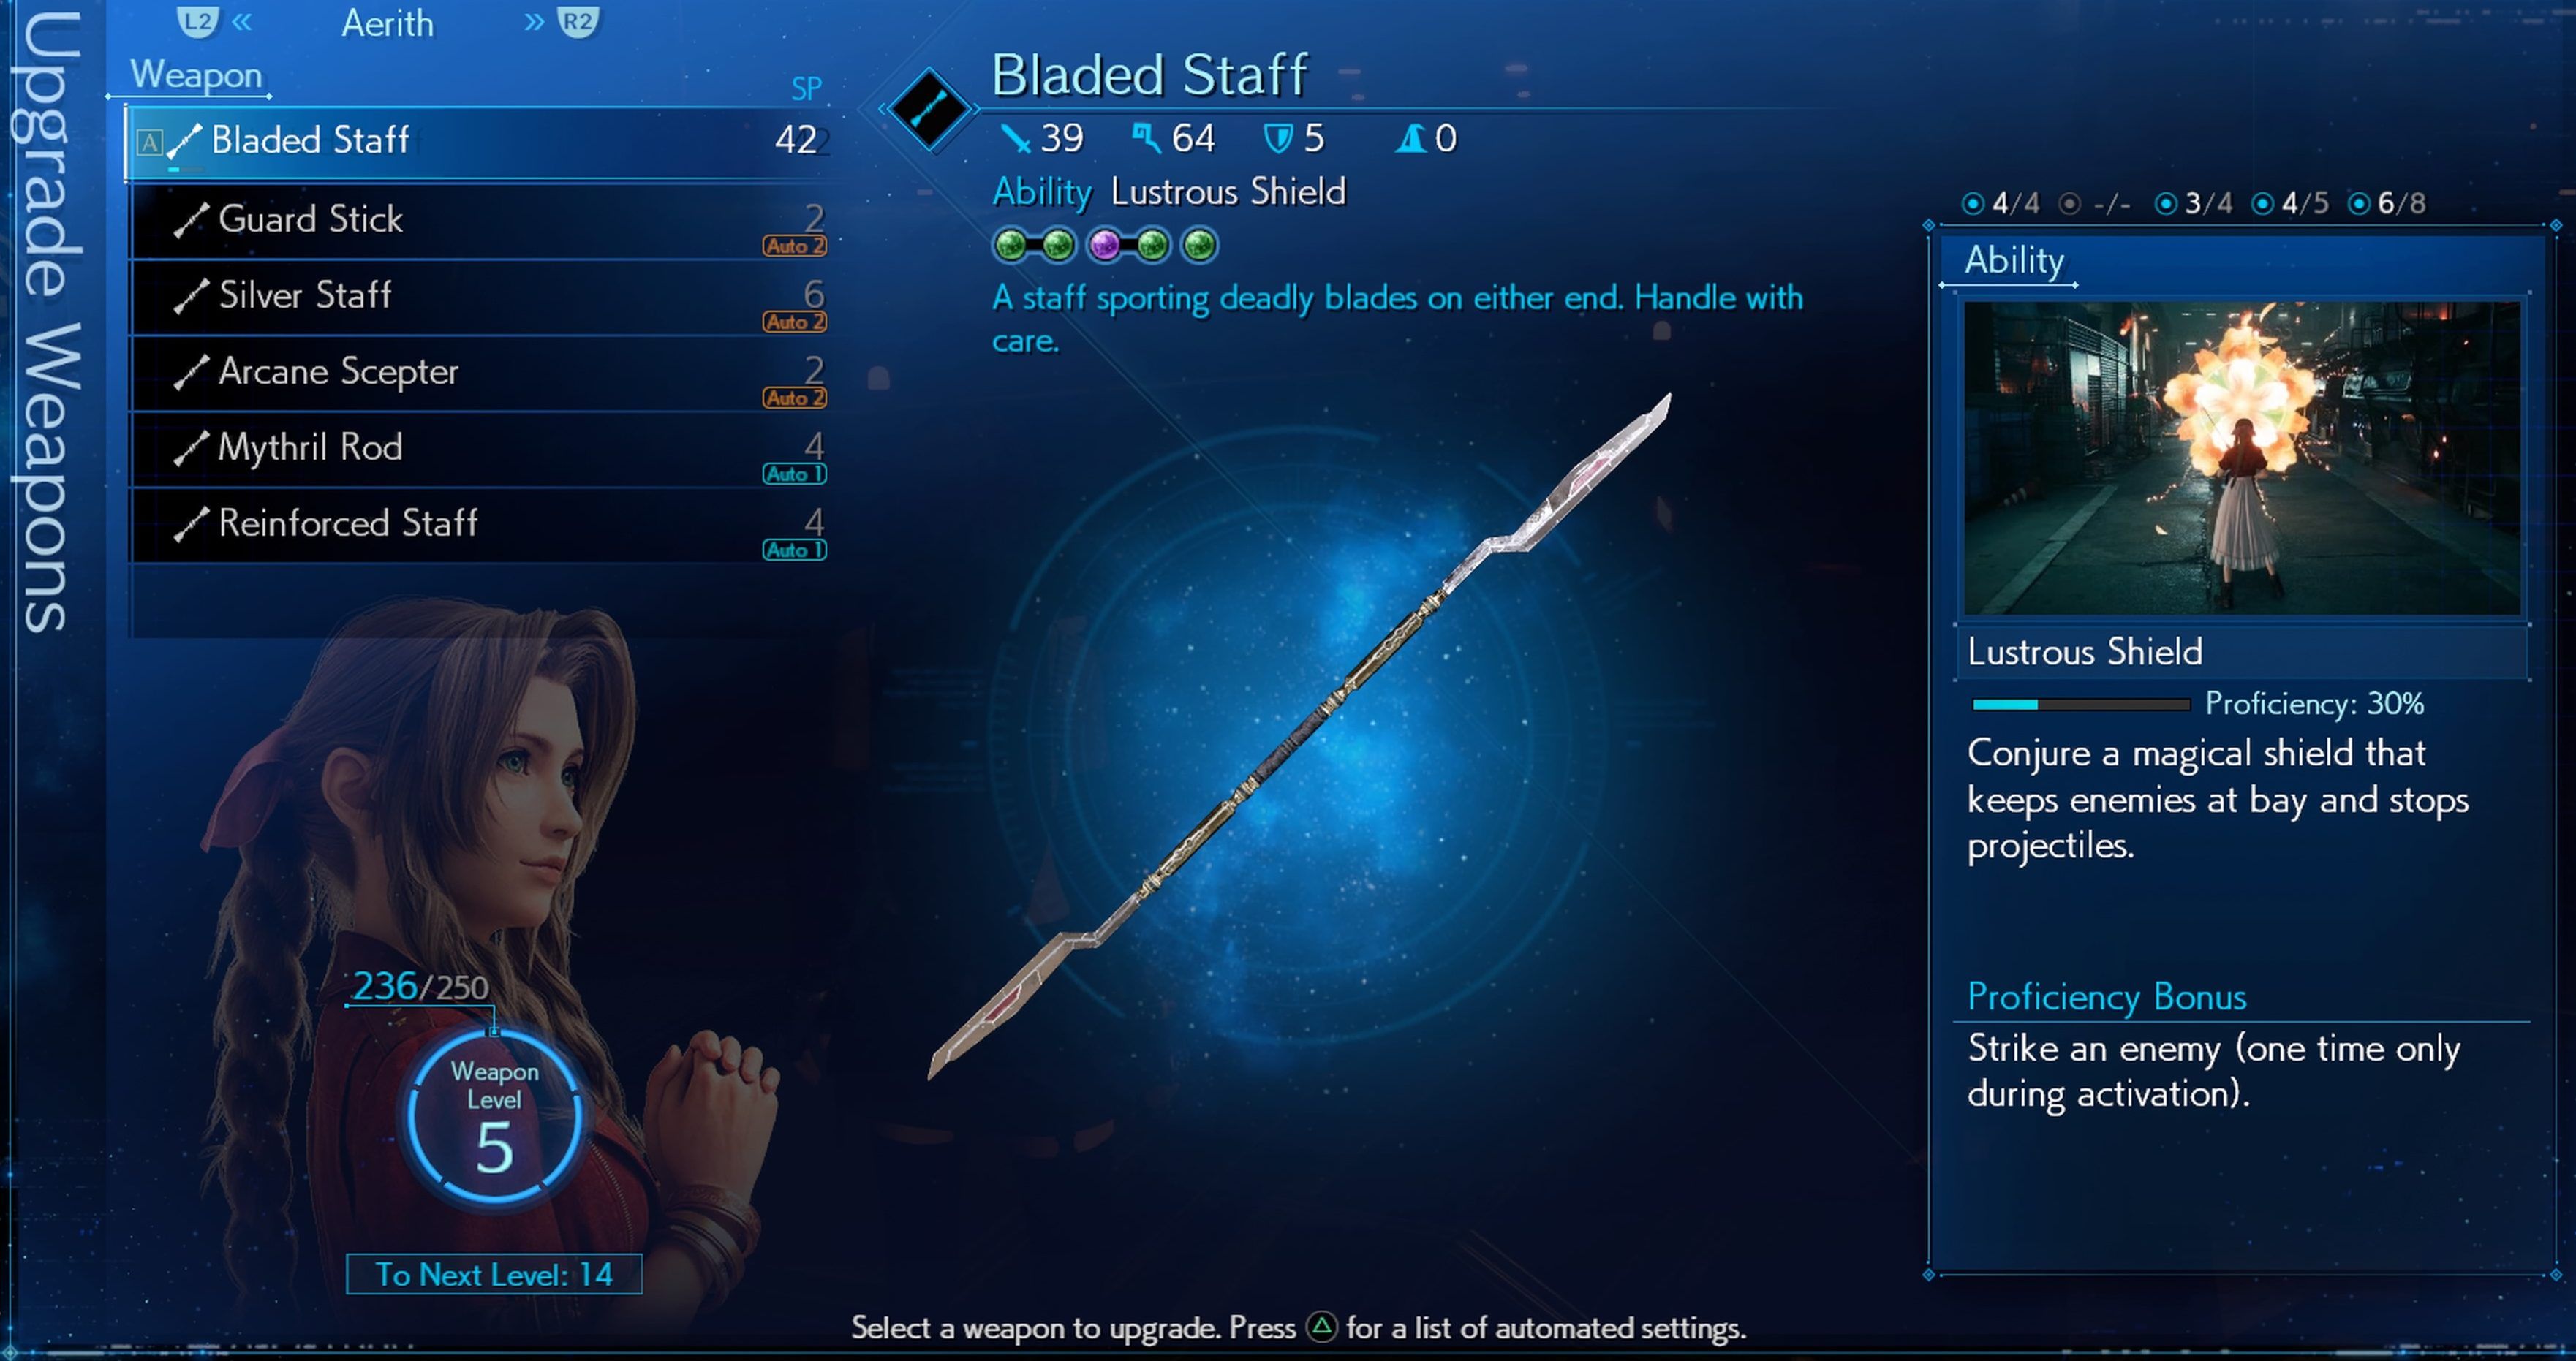 Aerith's Staff Fantasy Game Weapon